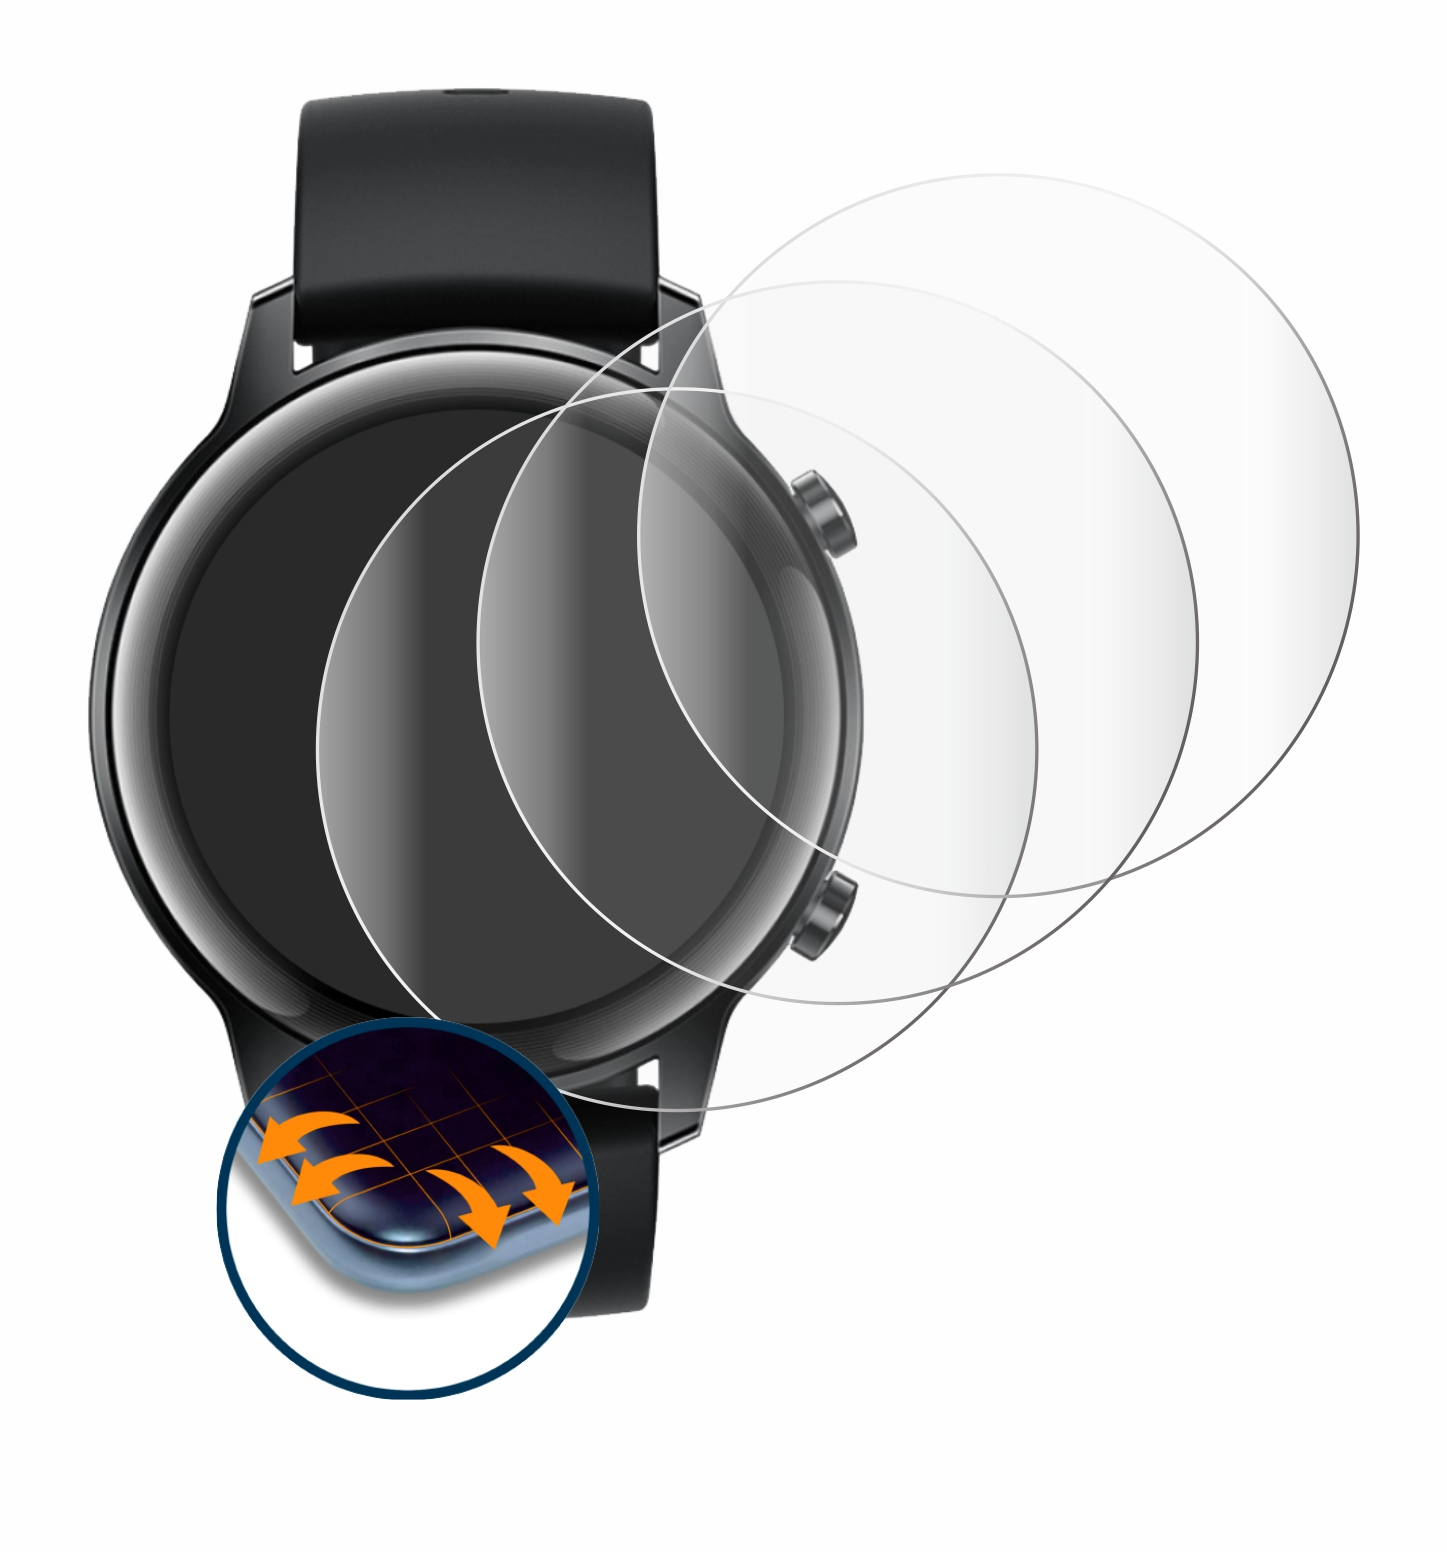 SAVVIES 4x Flex (42 Schutzfolie(für mm)) Full-Cover Curved Watch Honor 2 Magic 3D